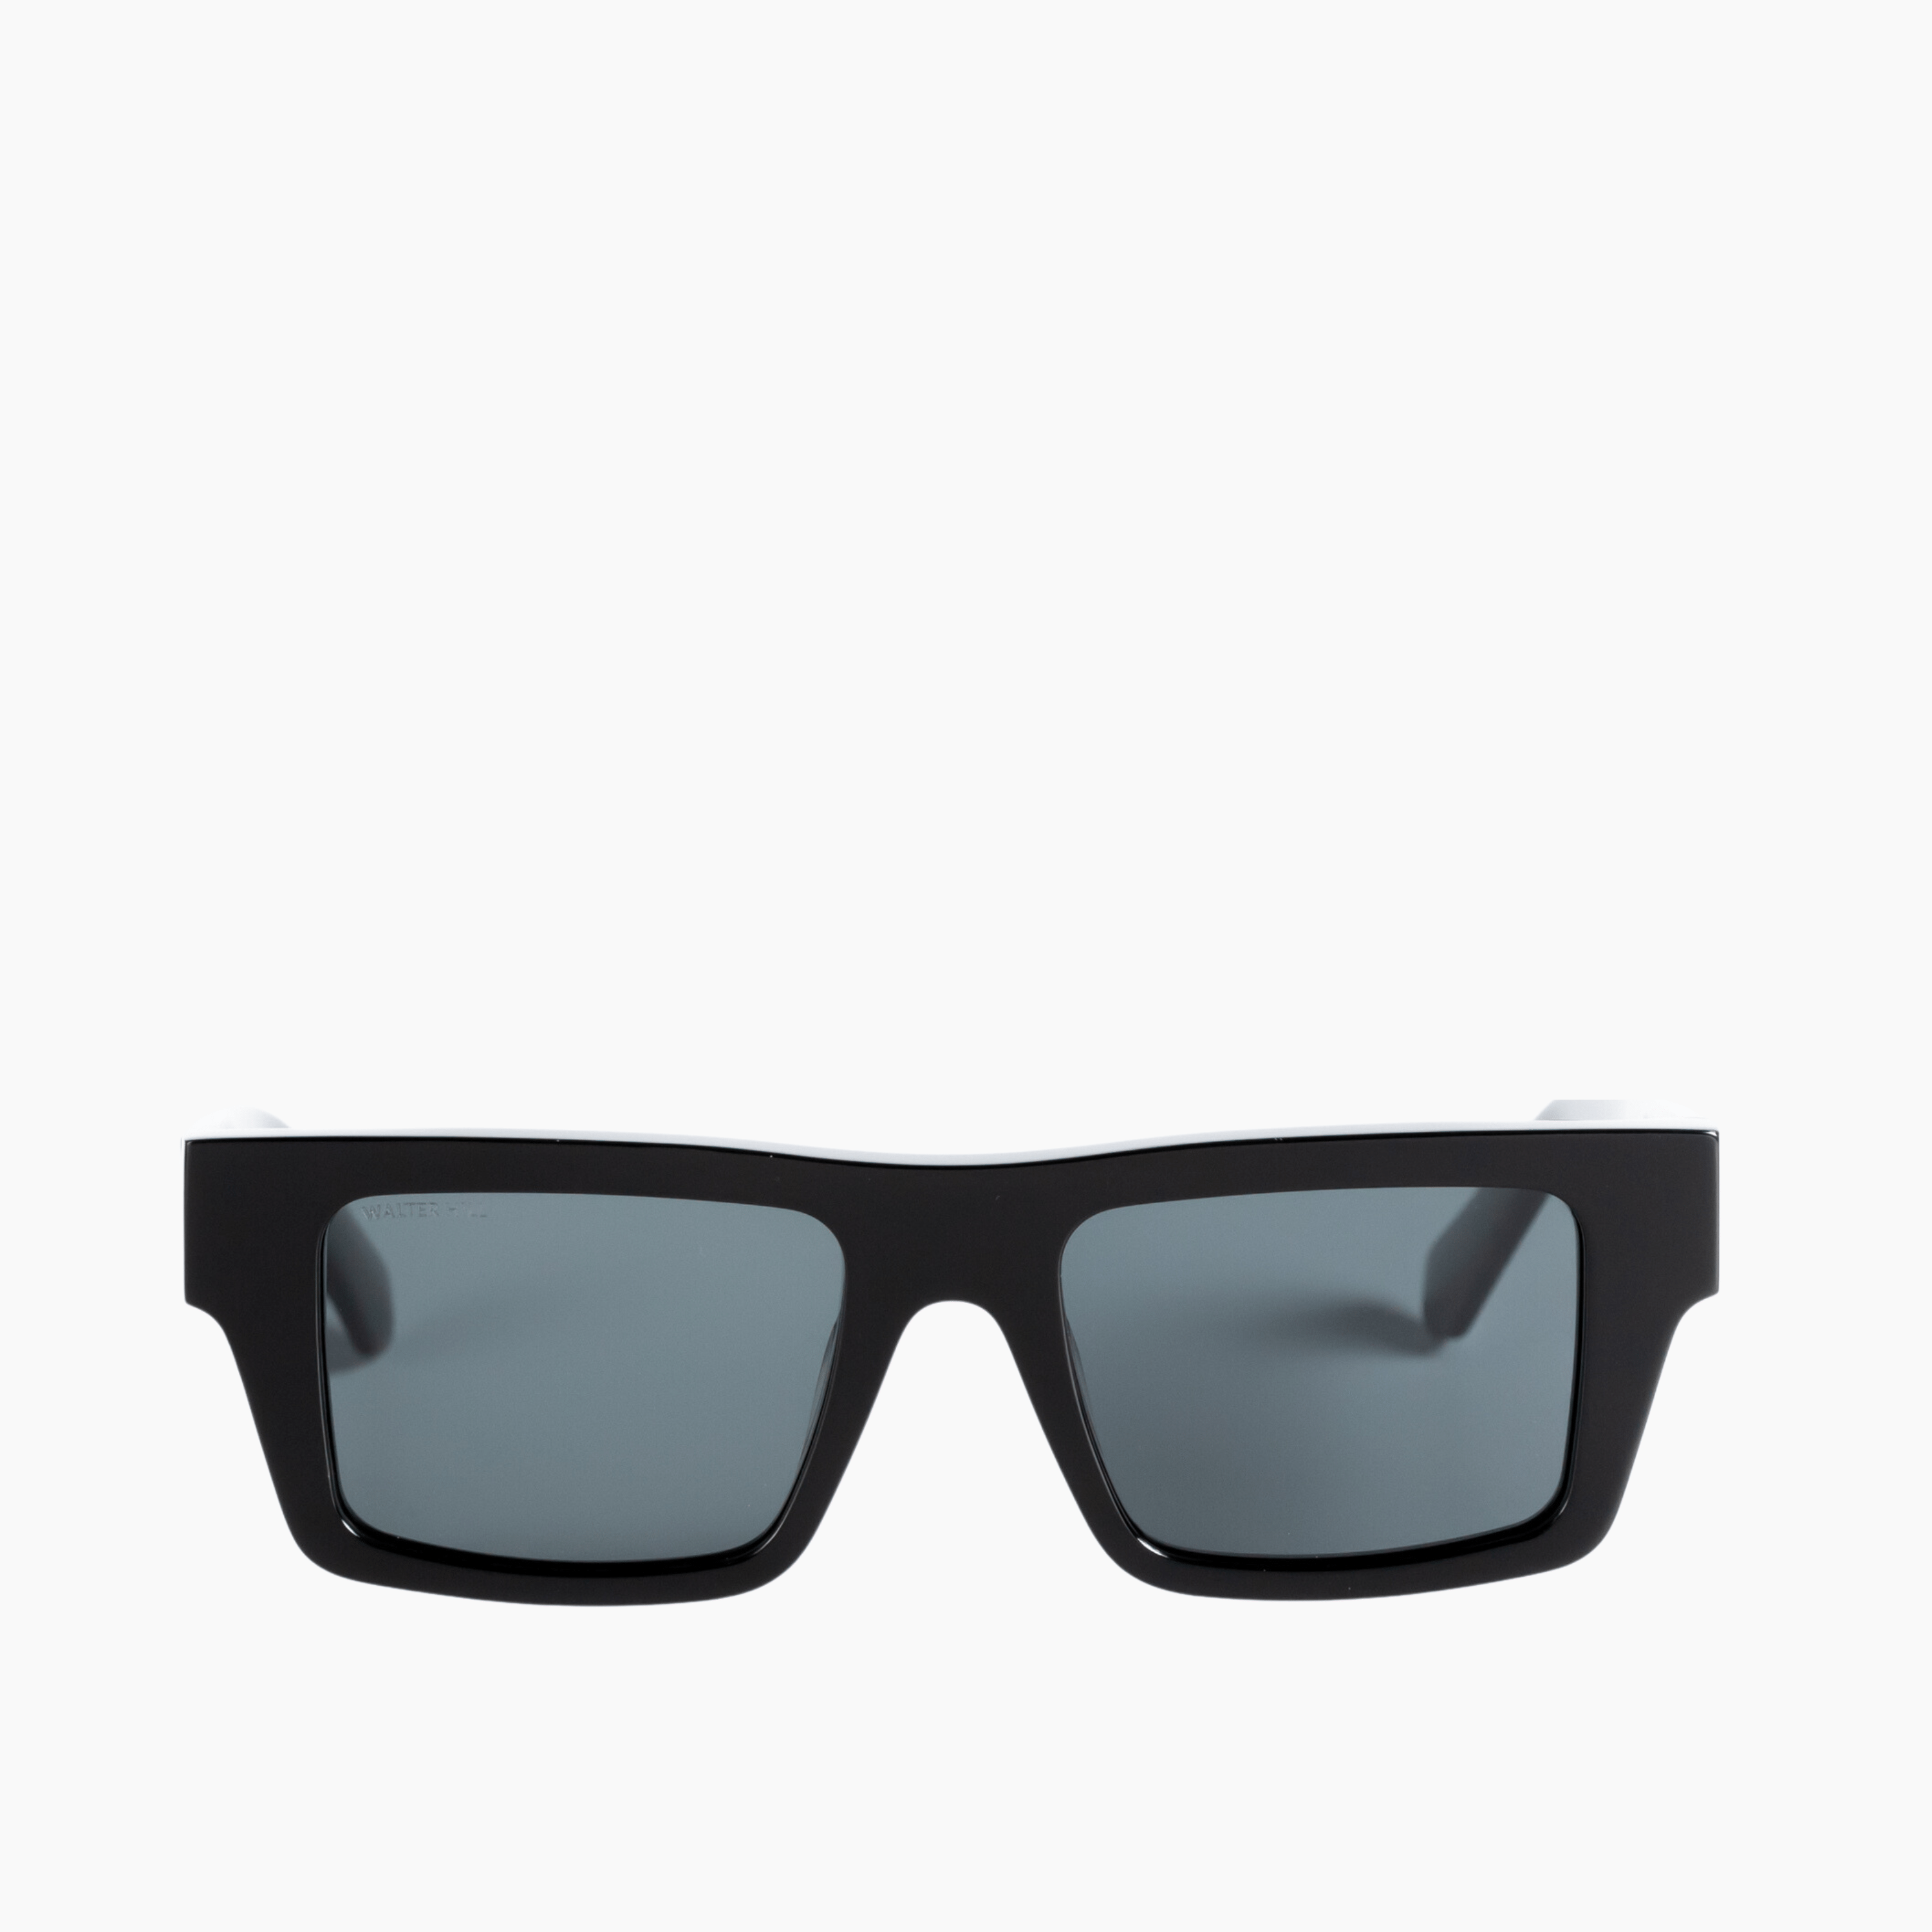 Walter Hill Sunglasses Oversized / Black / Polarized Cat.3 KAI - Black